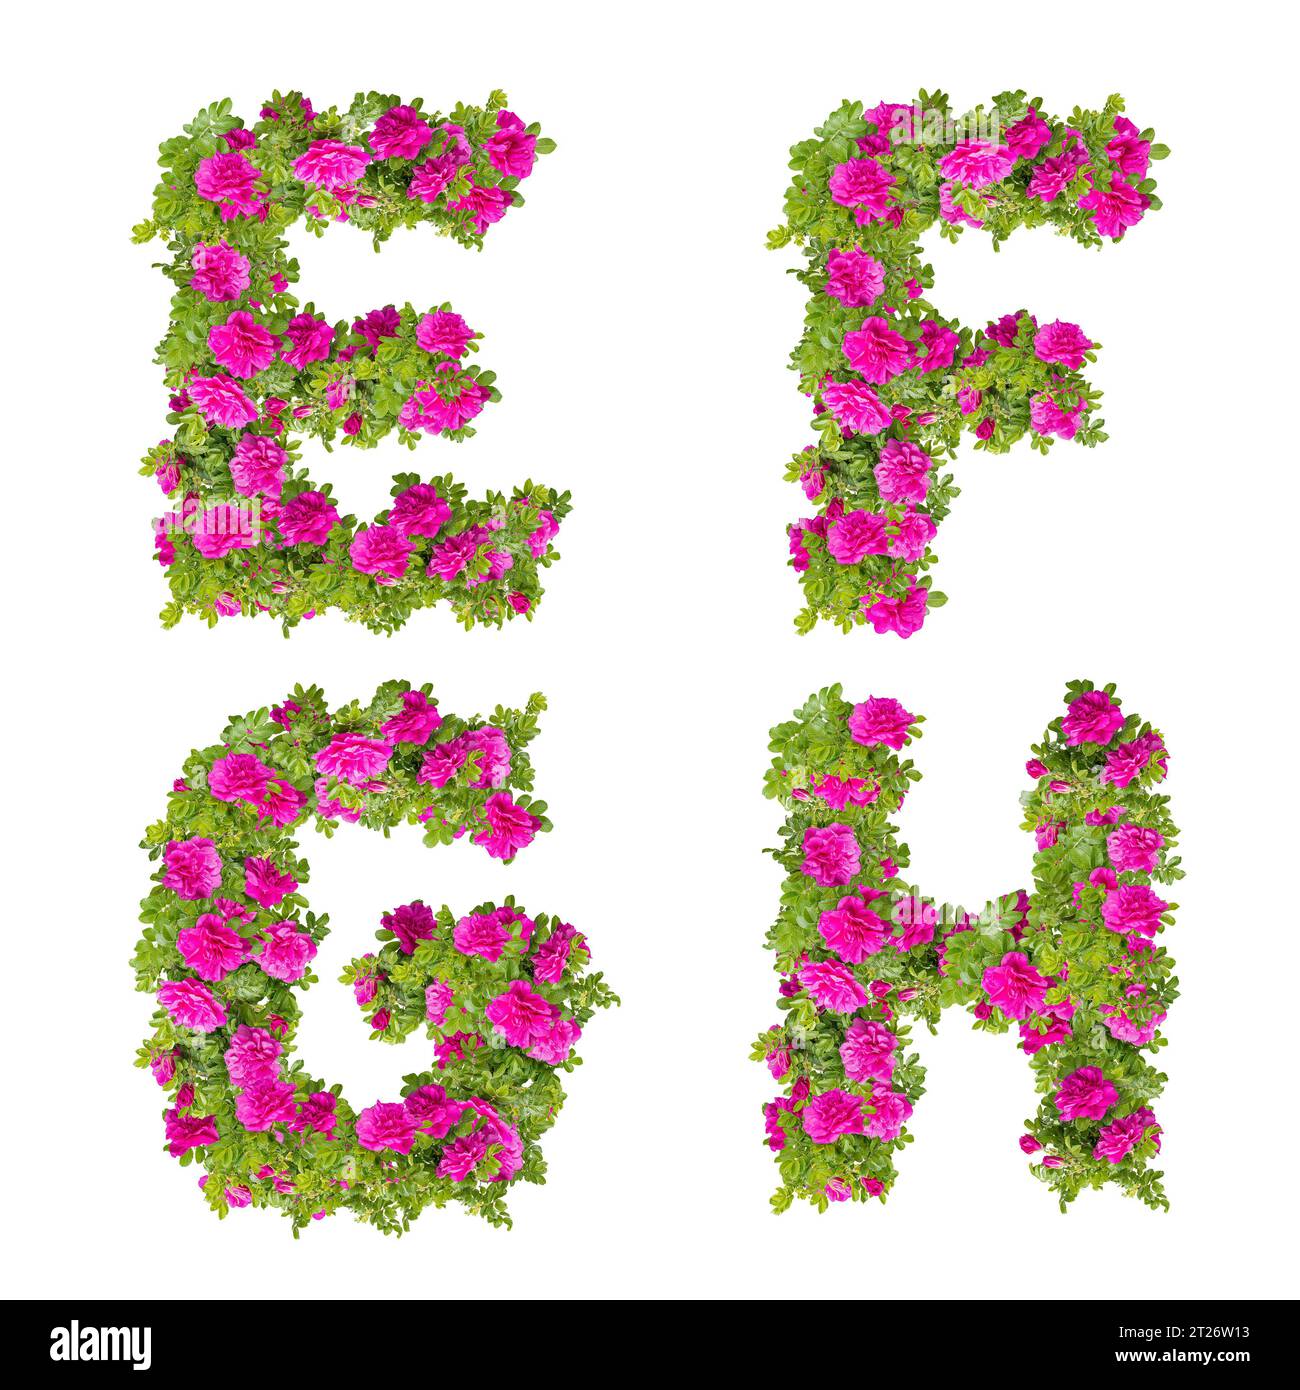 3D illustration of pink wild rose flowers alphabet - letters E-H Stock Photo